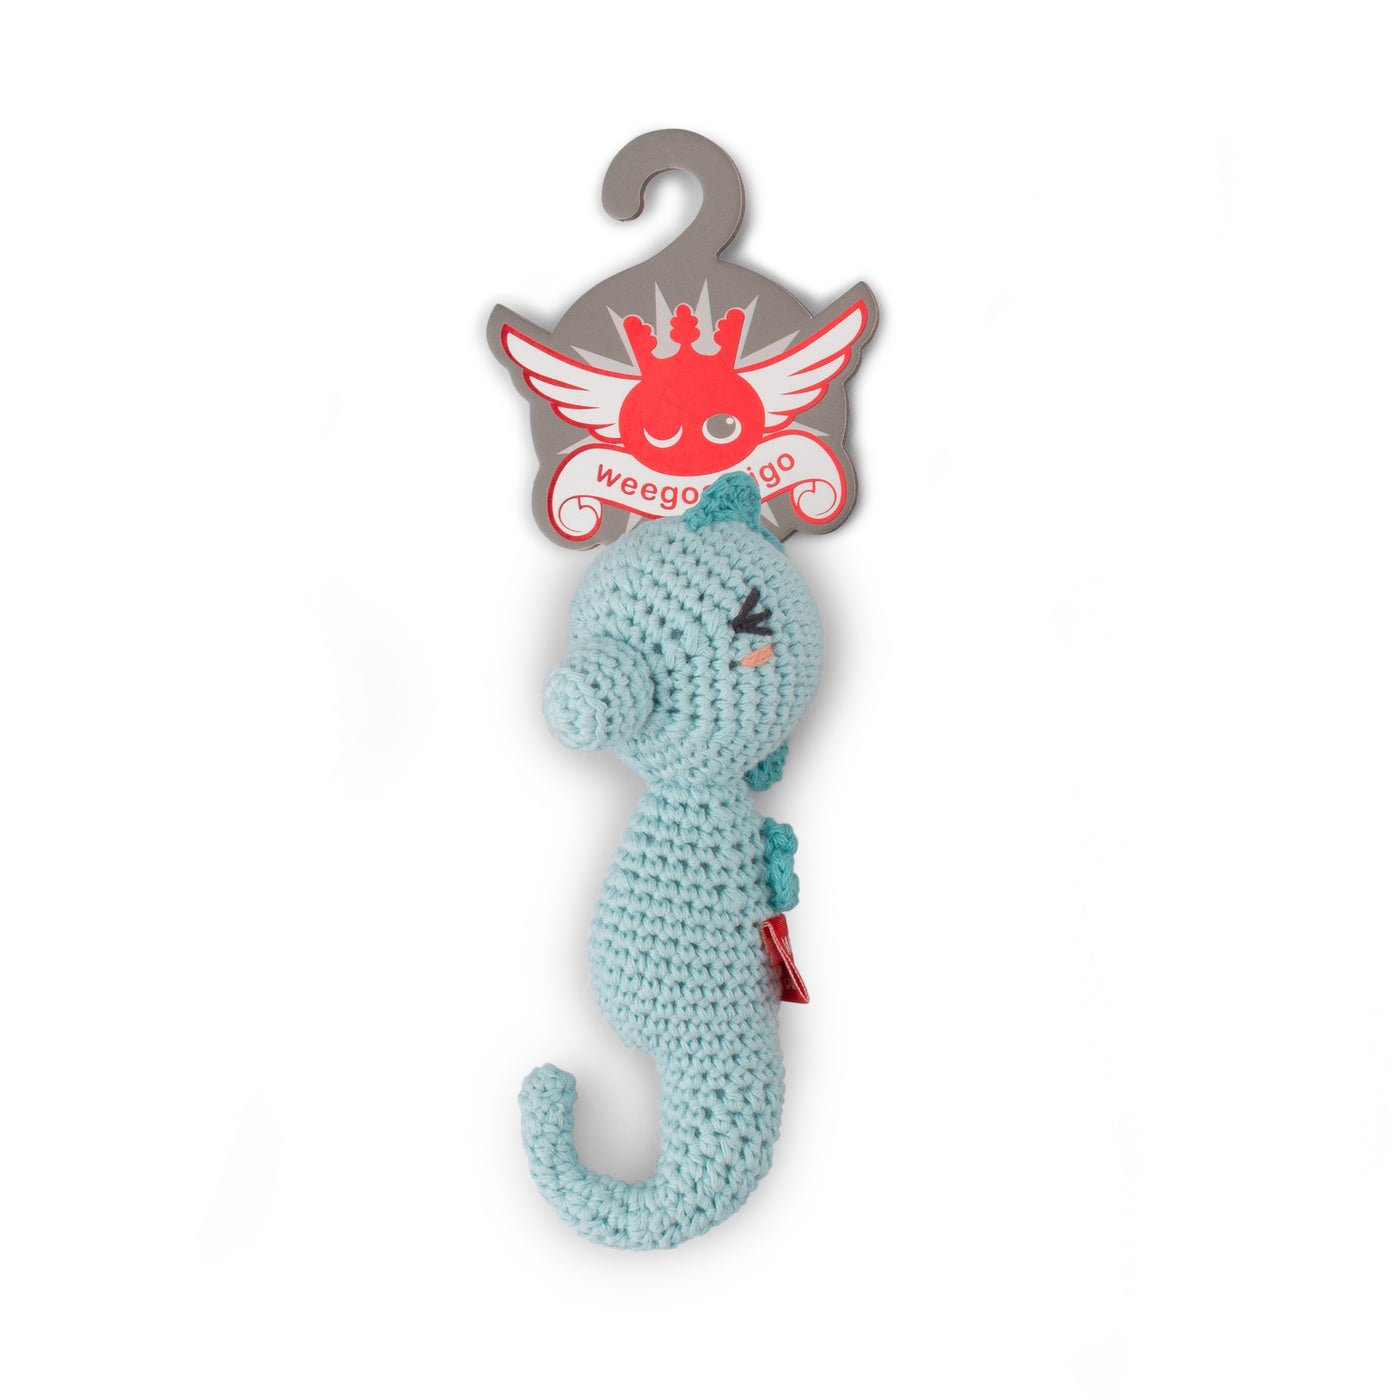 Crochet Rattle - Seahorse